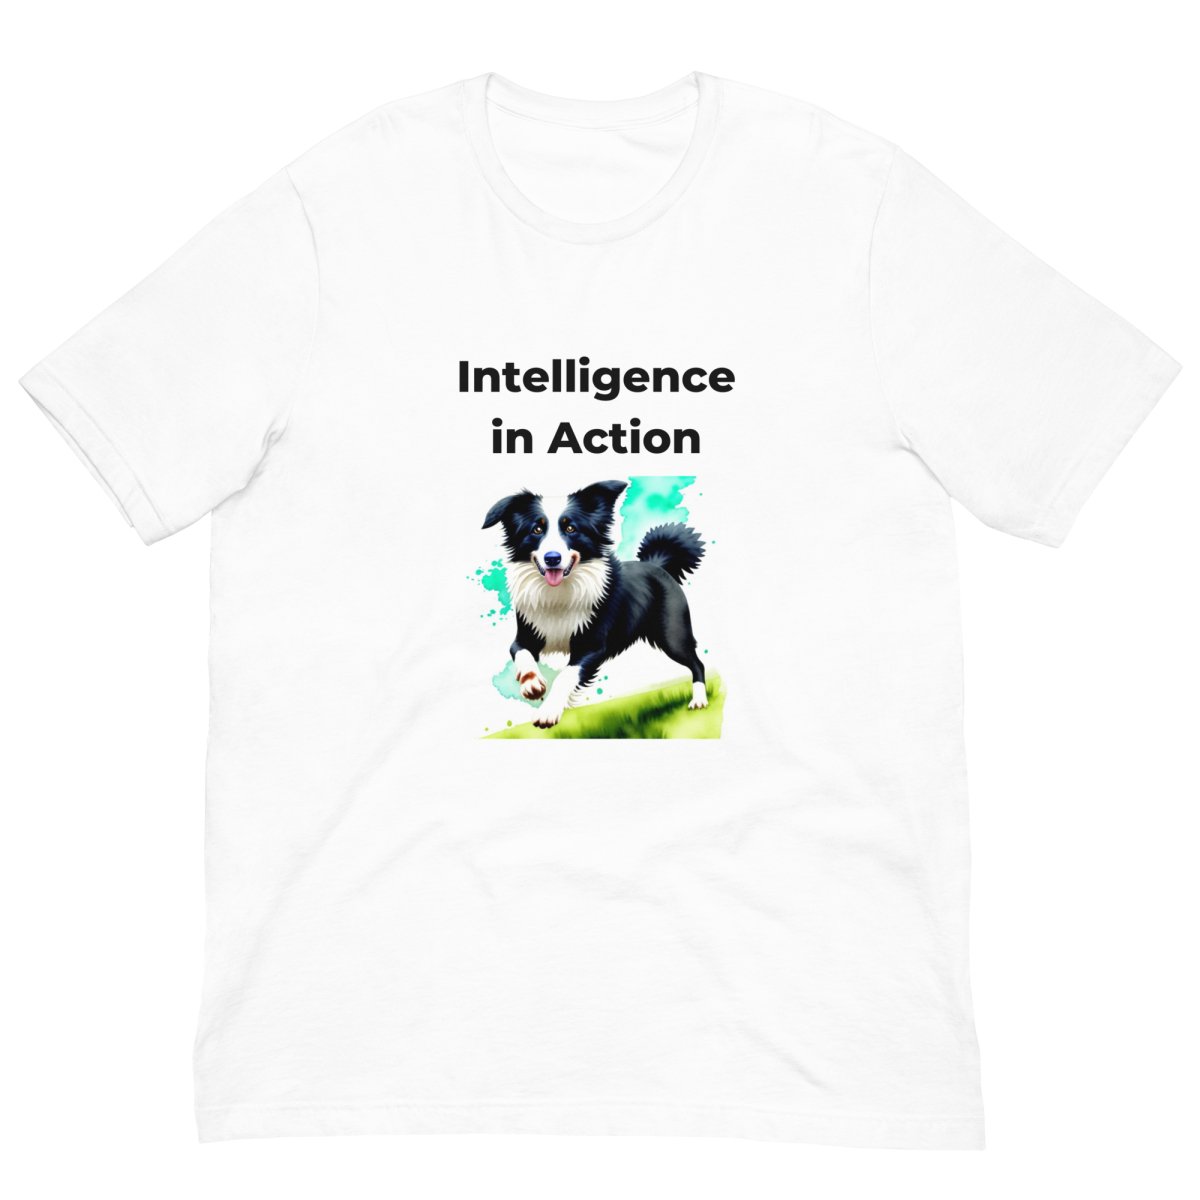 Intelligence in Action - Unisex Tee - Funny Nikko